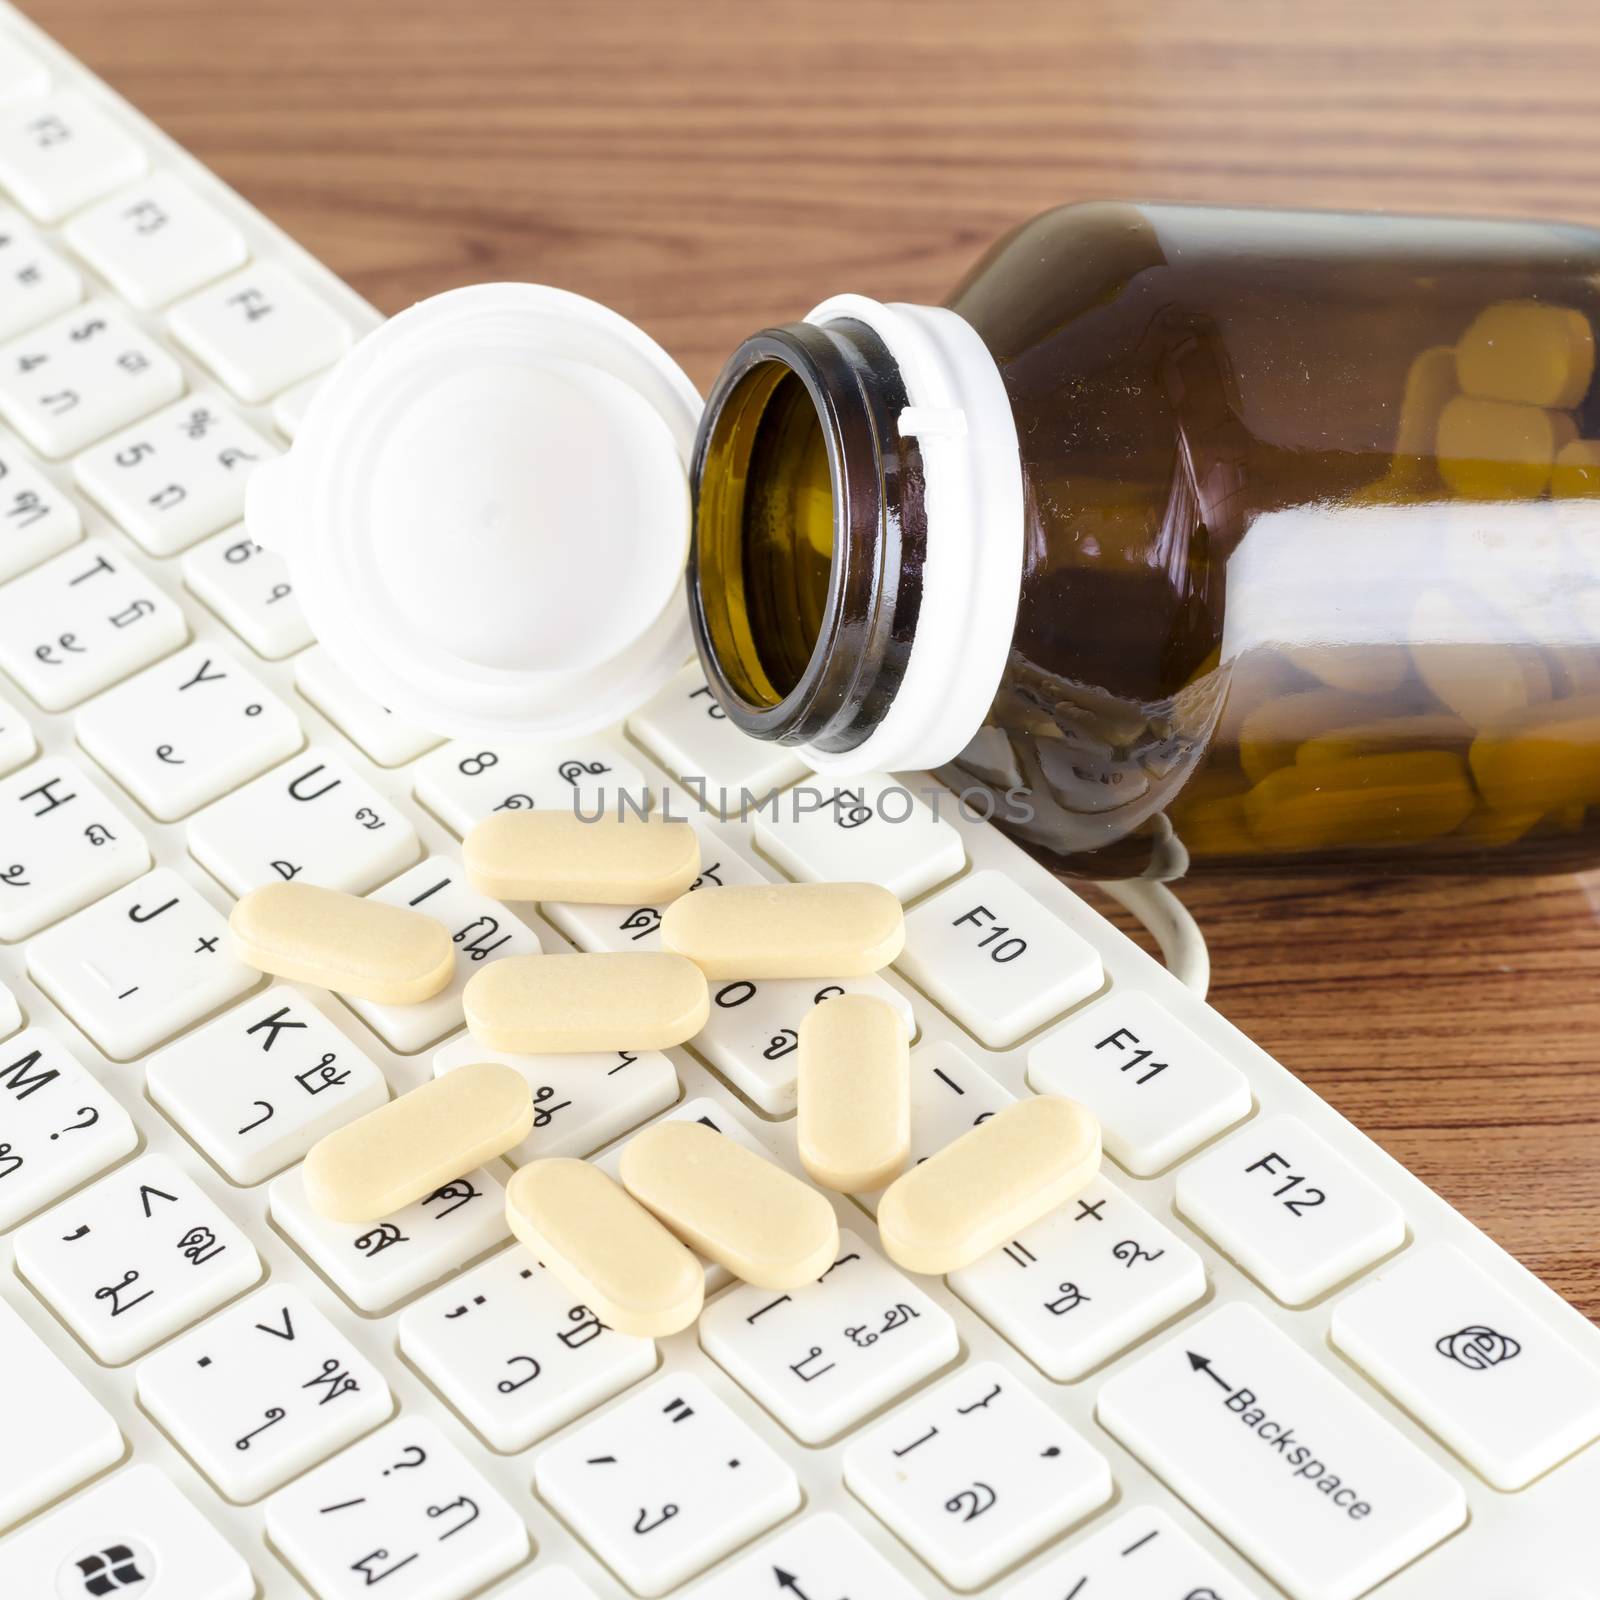 pills on keyboard computer by ammza12